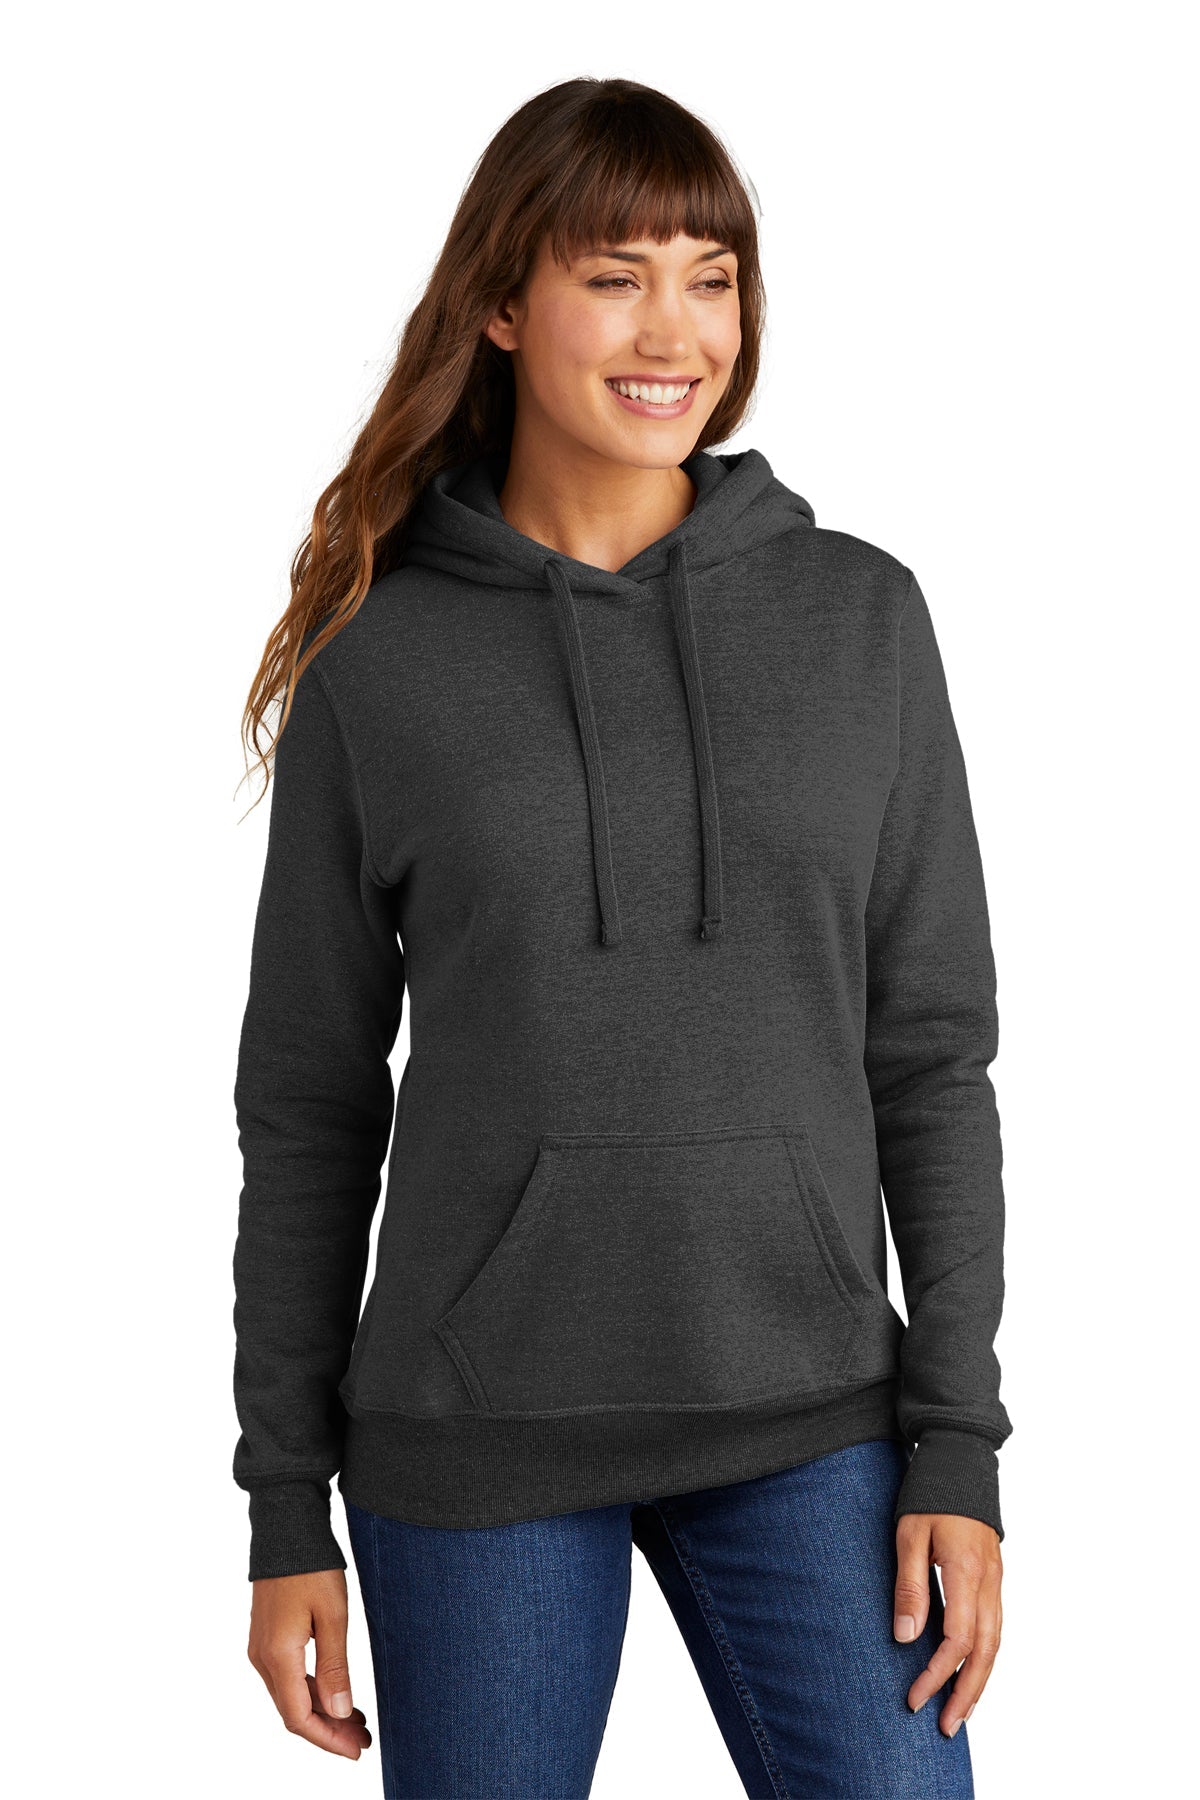 Ladies Core Fleece Pullover Hooded Sweatshirt LPC78H - BT Imprintables Shirts